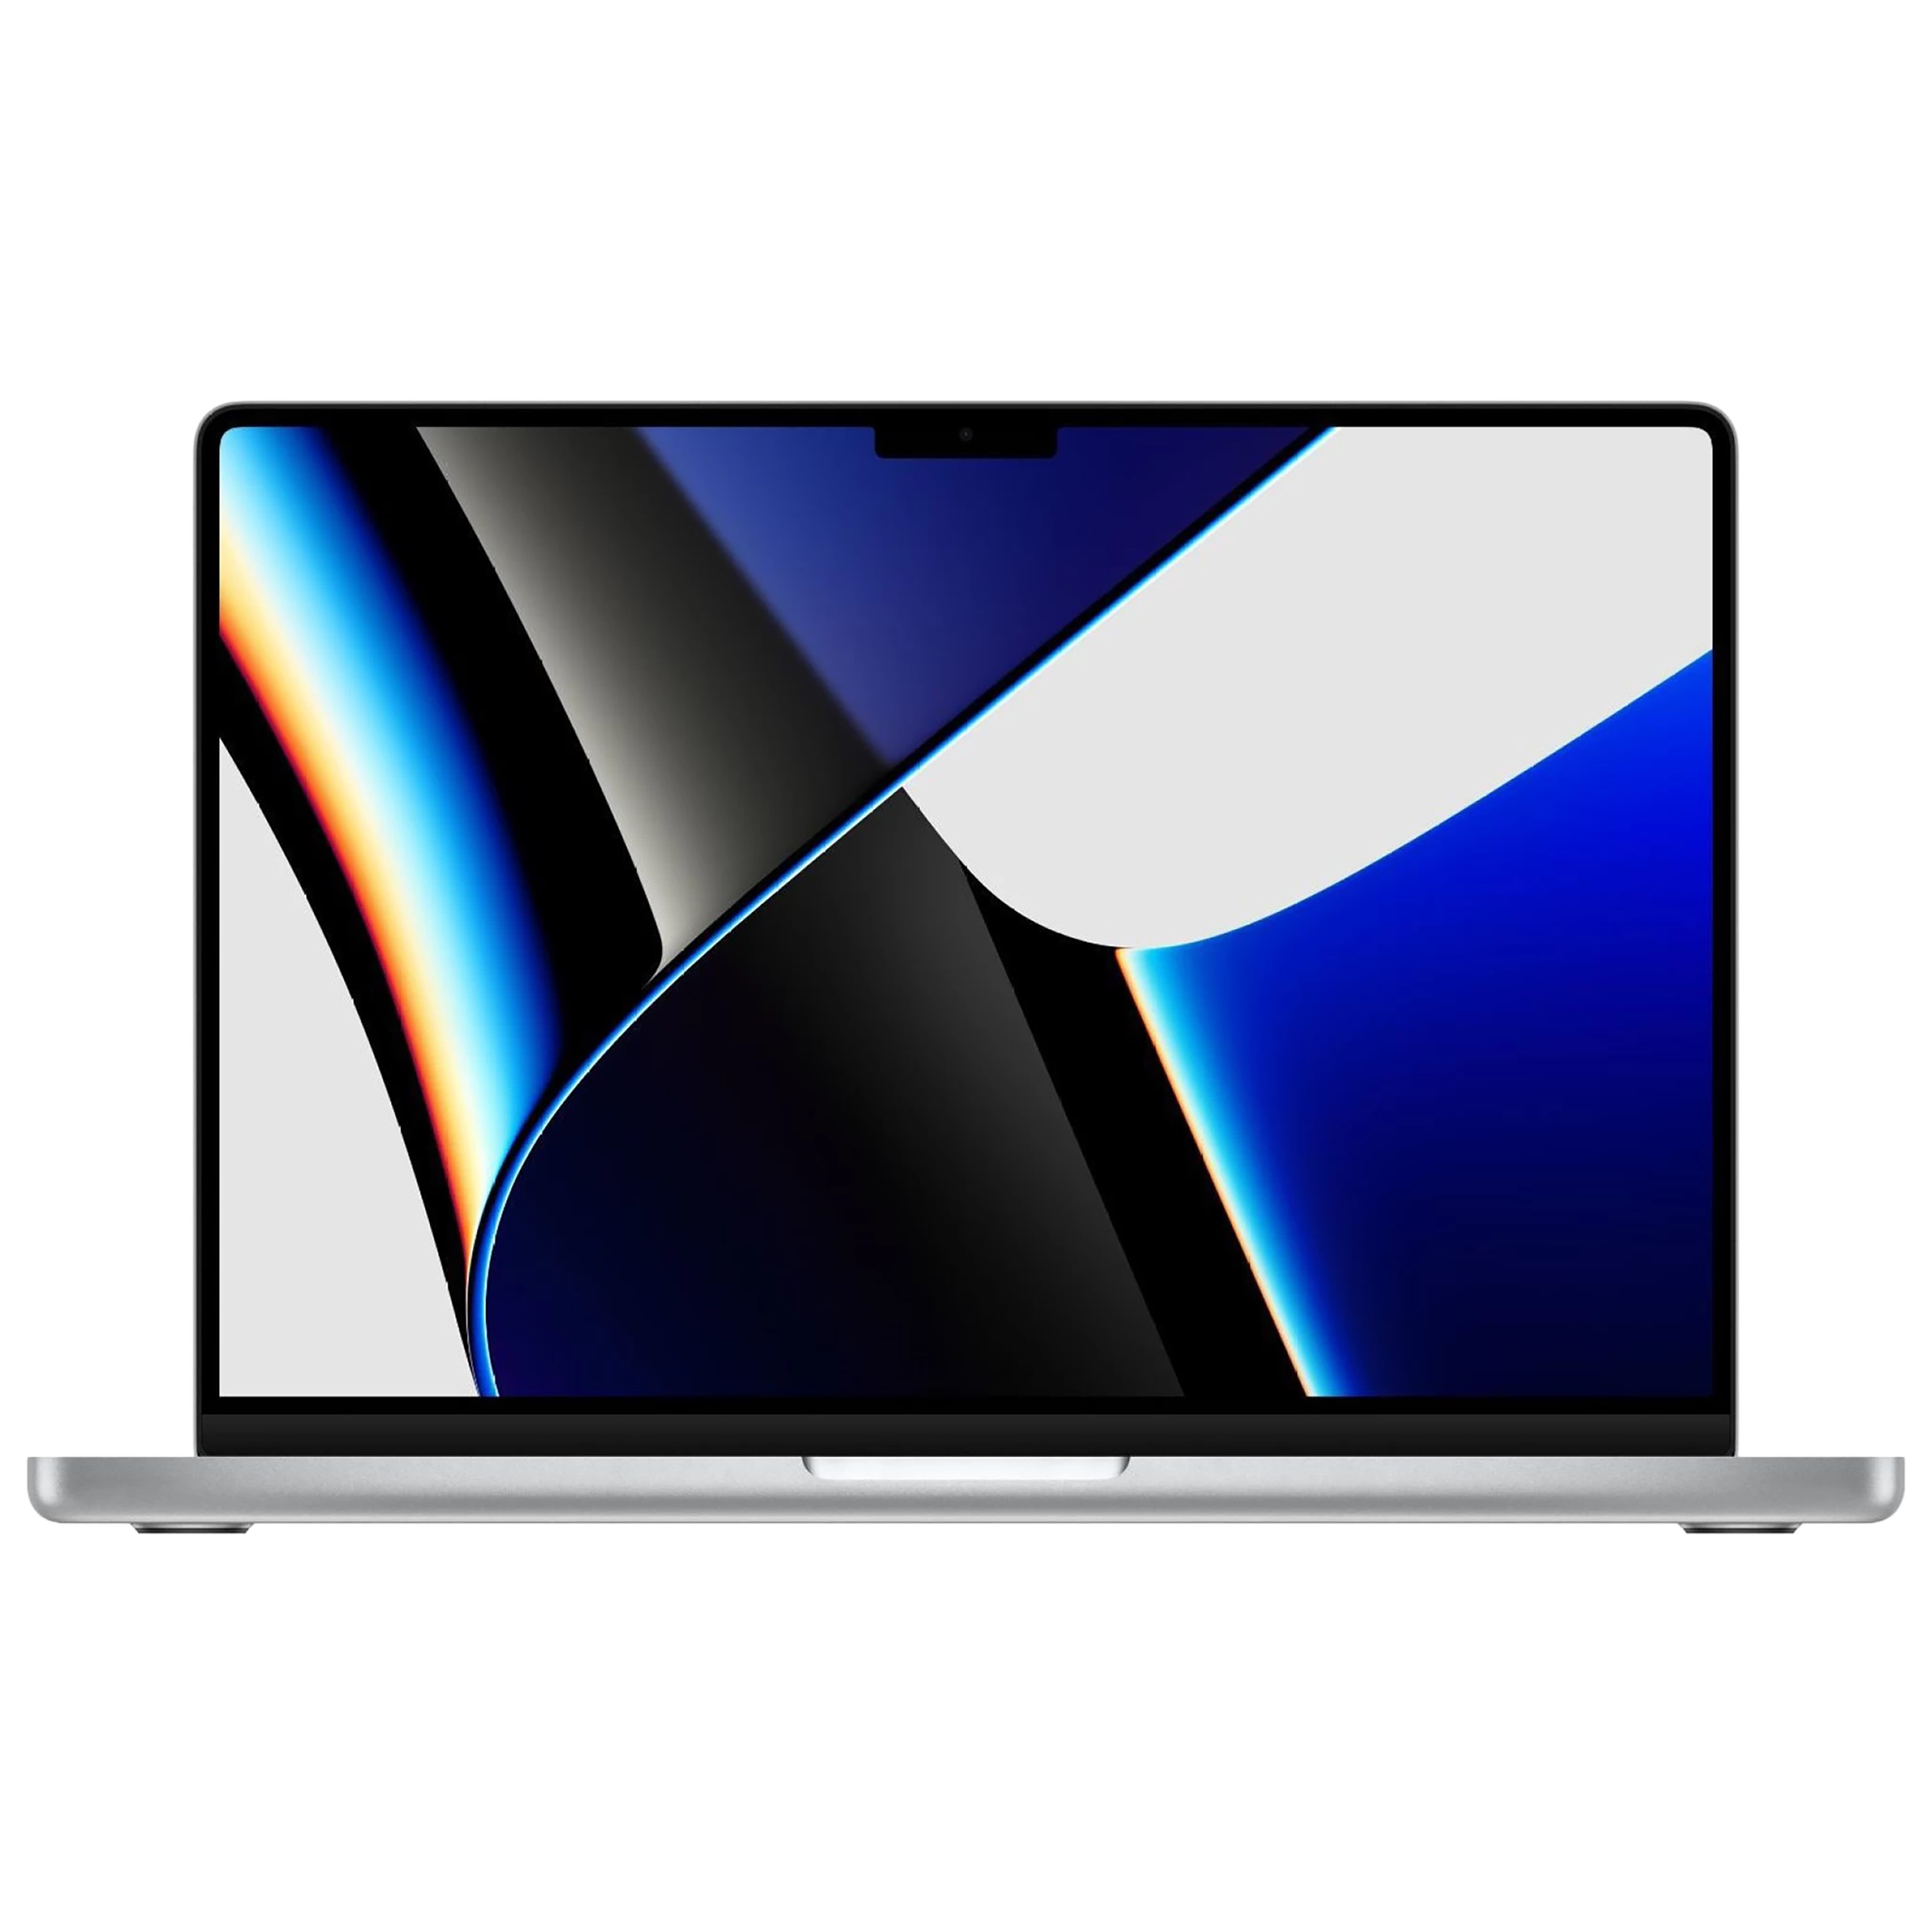 MacBook Pro 2020 1TB